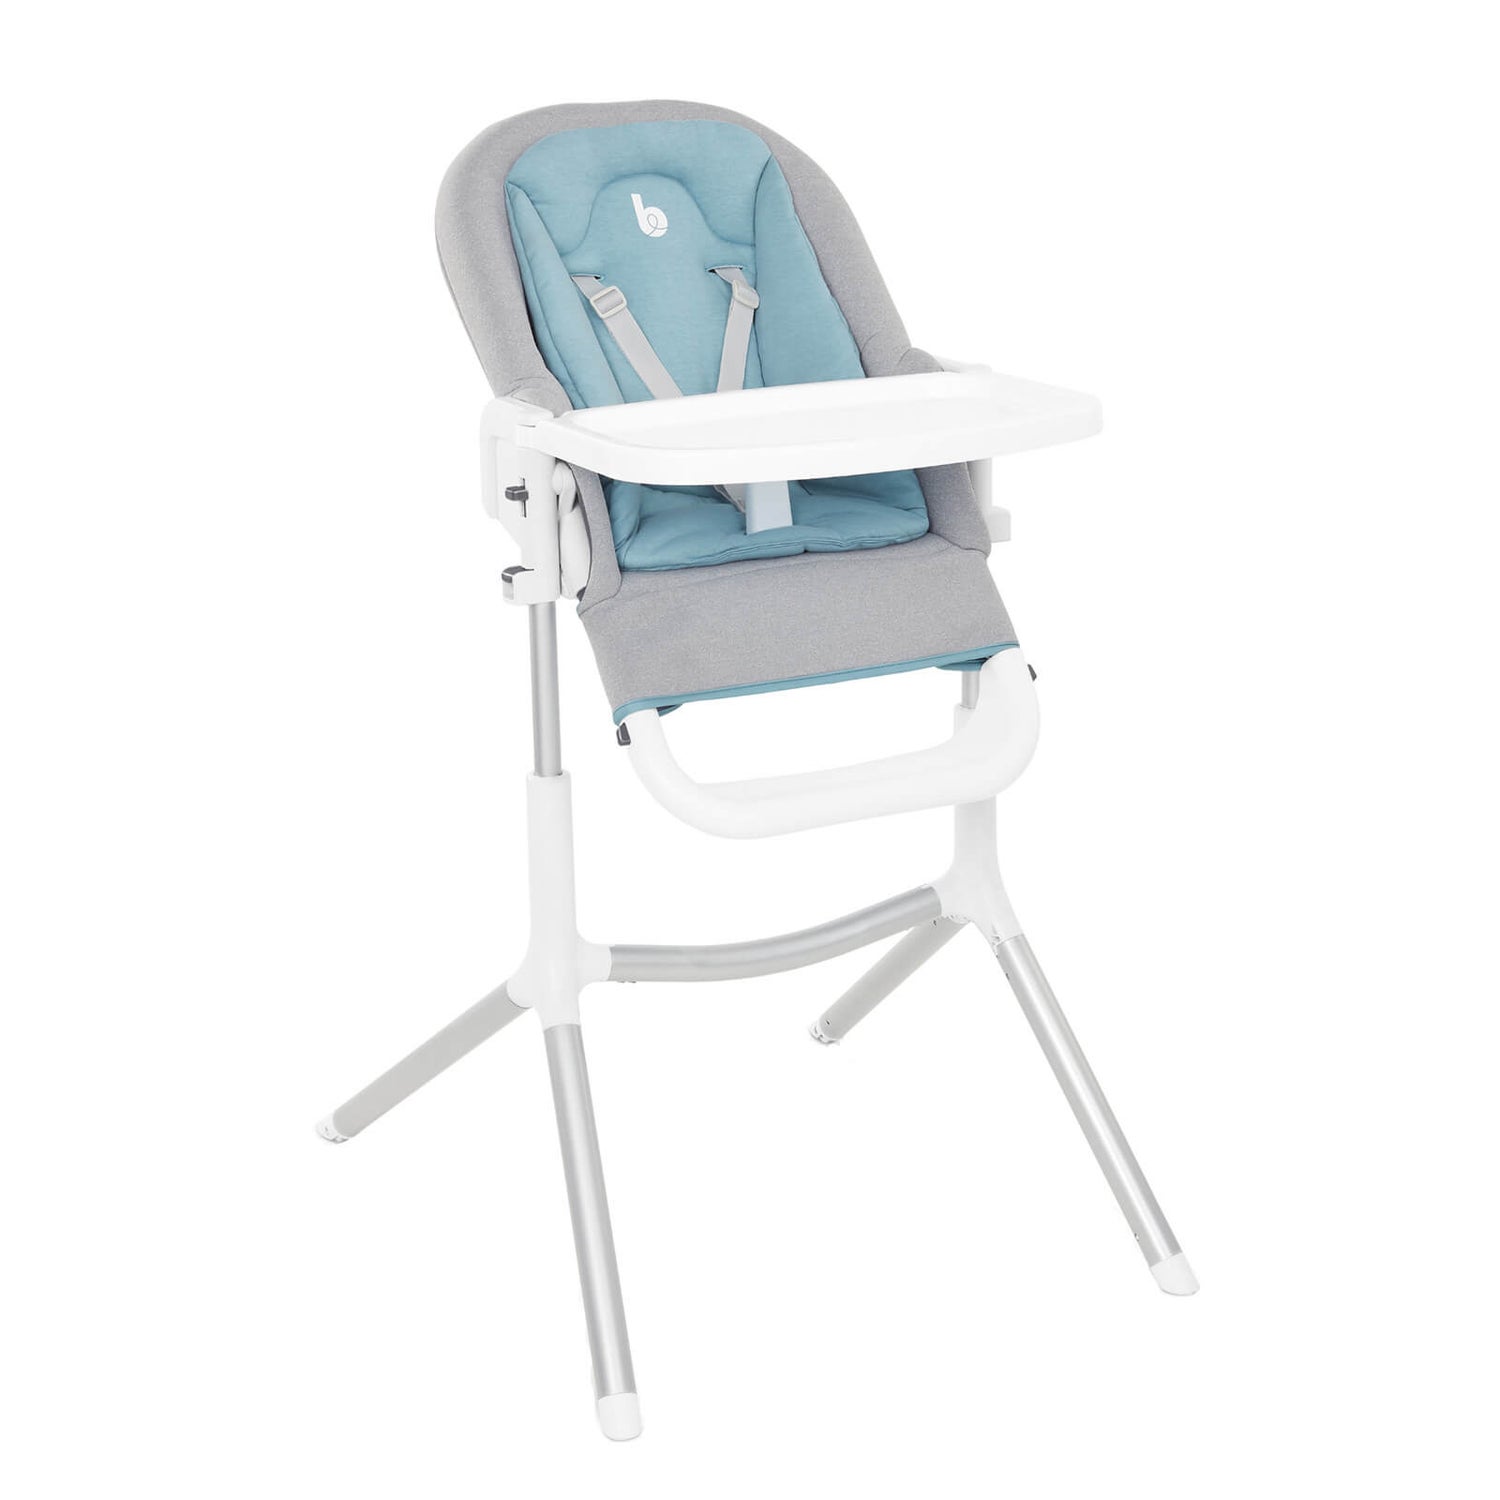 Babymoov Slick High Chair - Grey/Teal